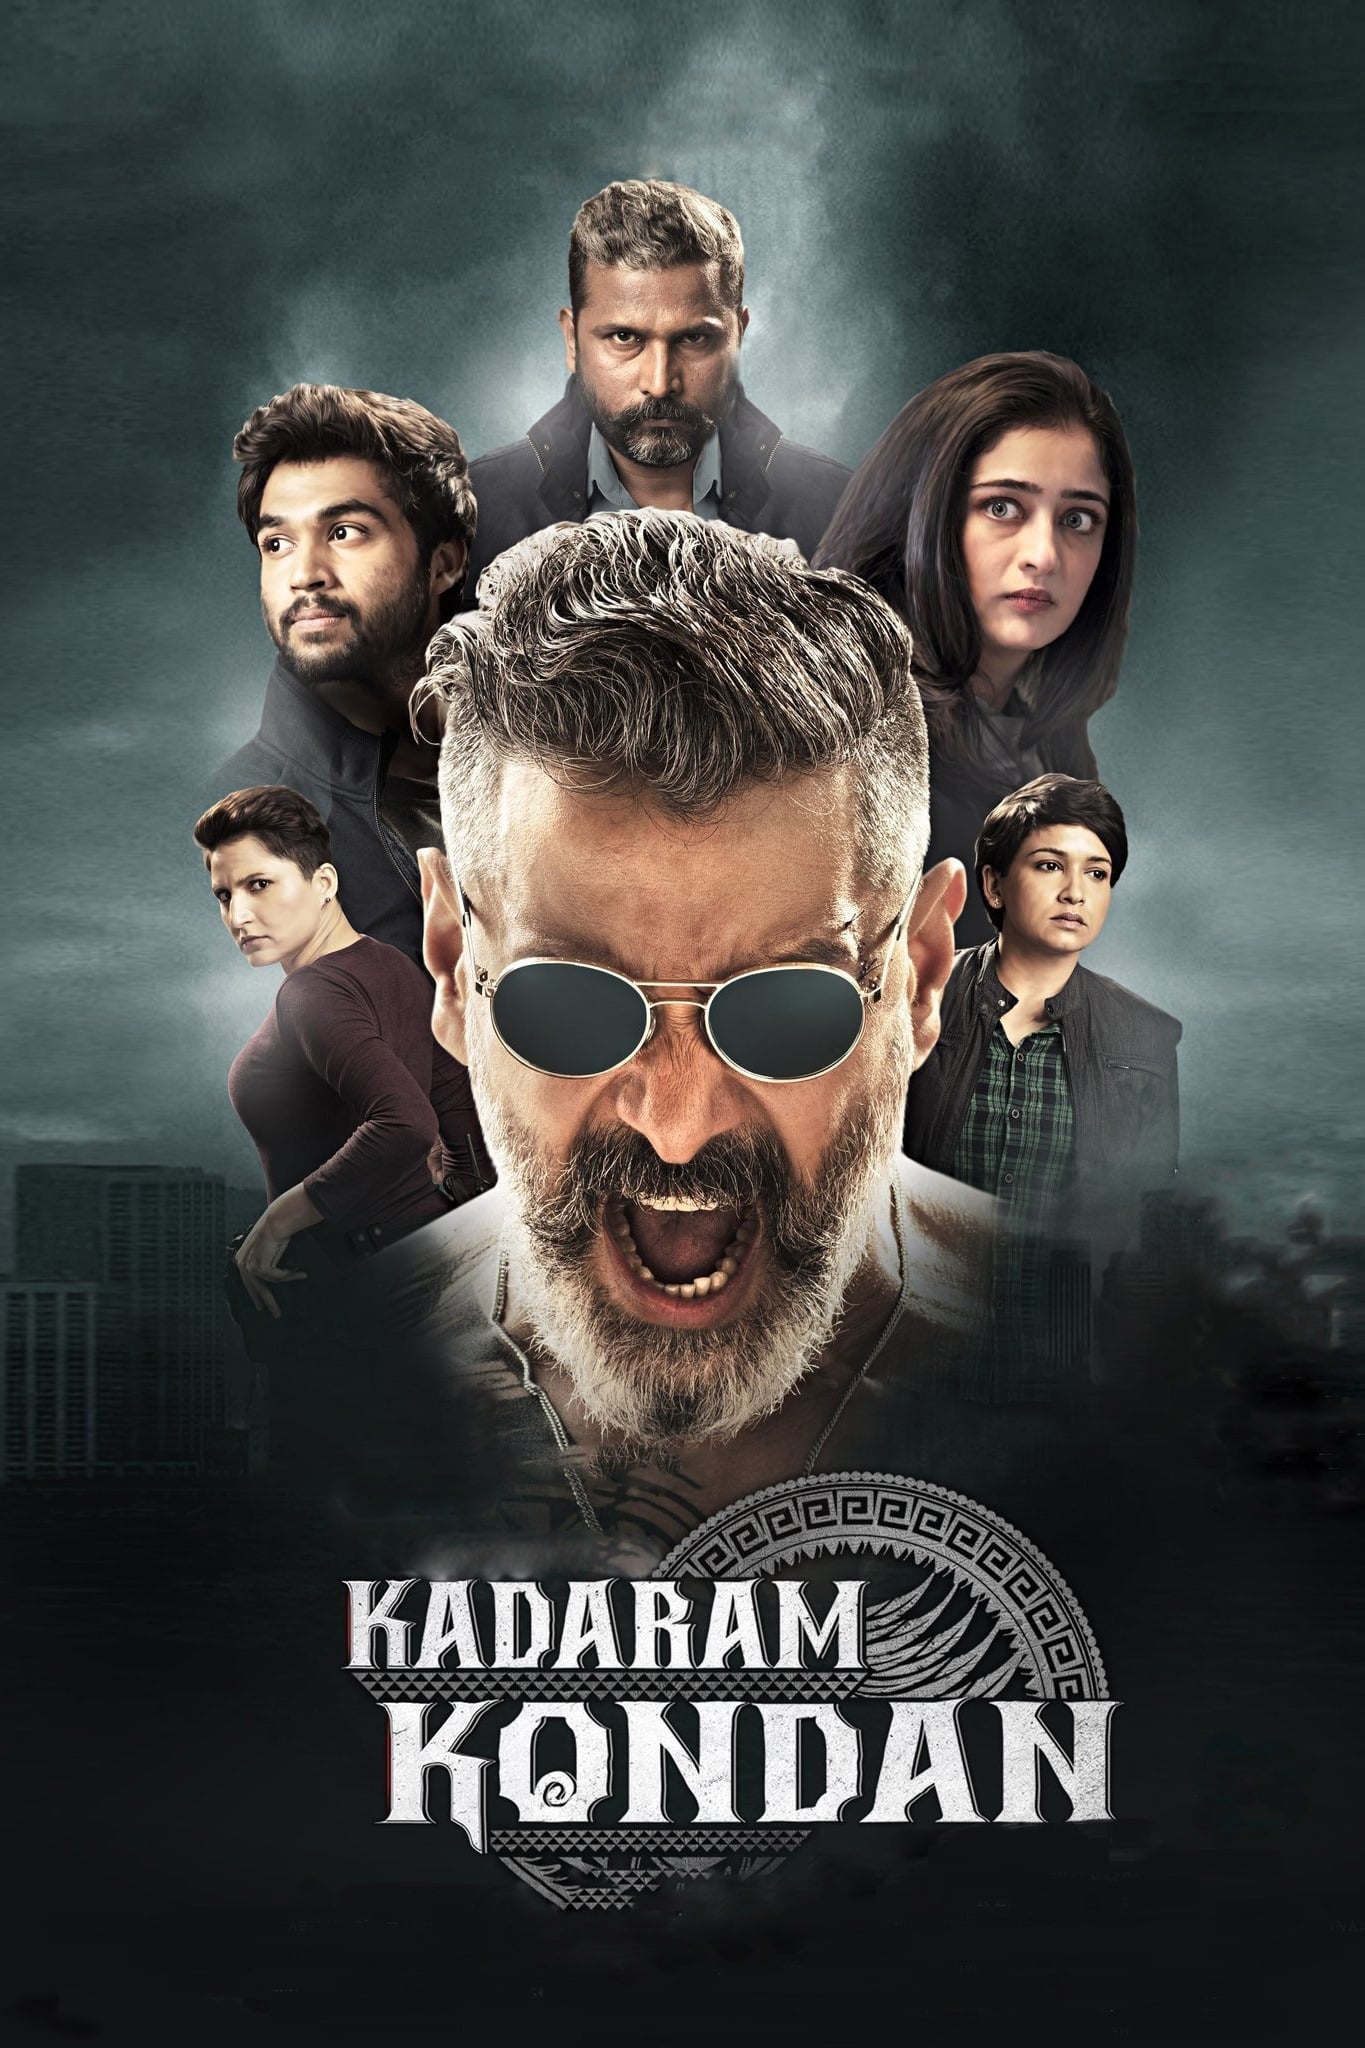 Poster for the movie "Kadaram Kondan"